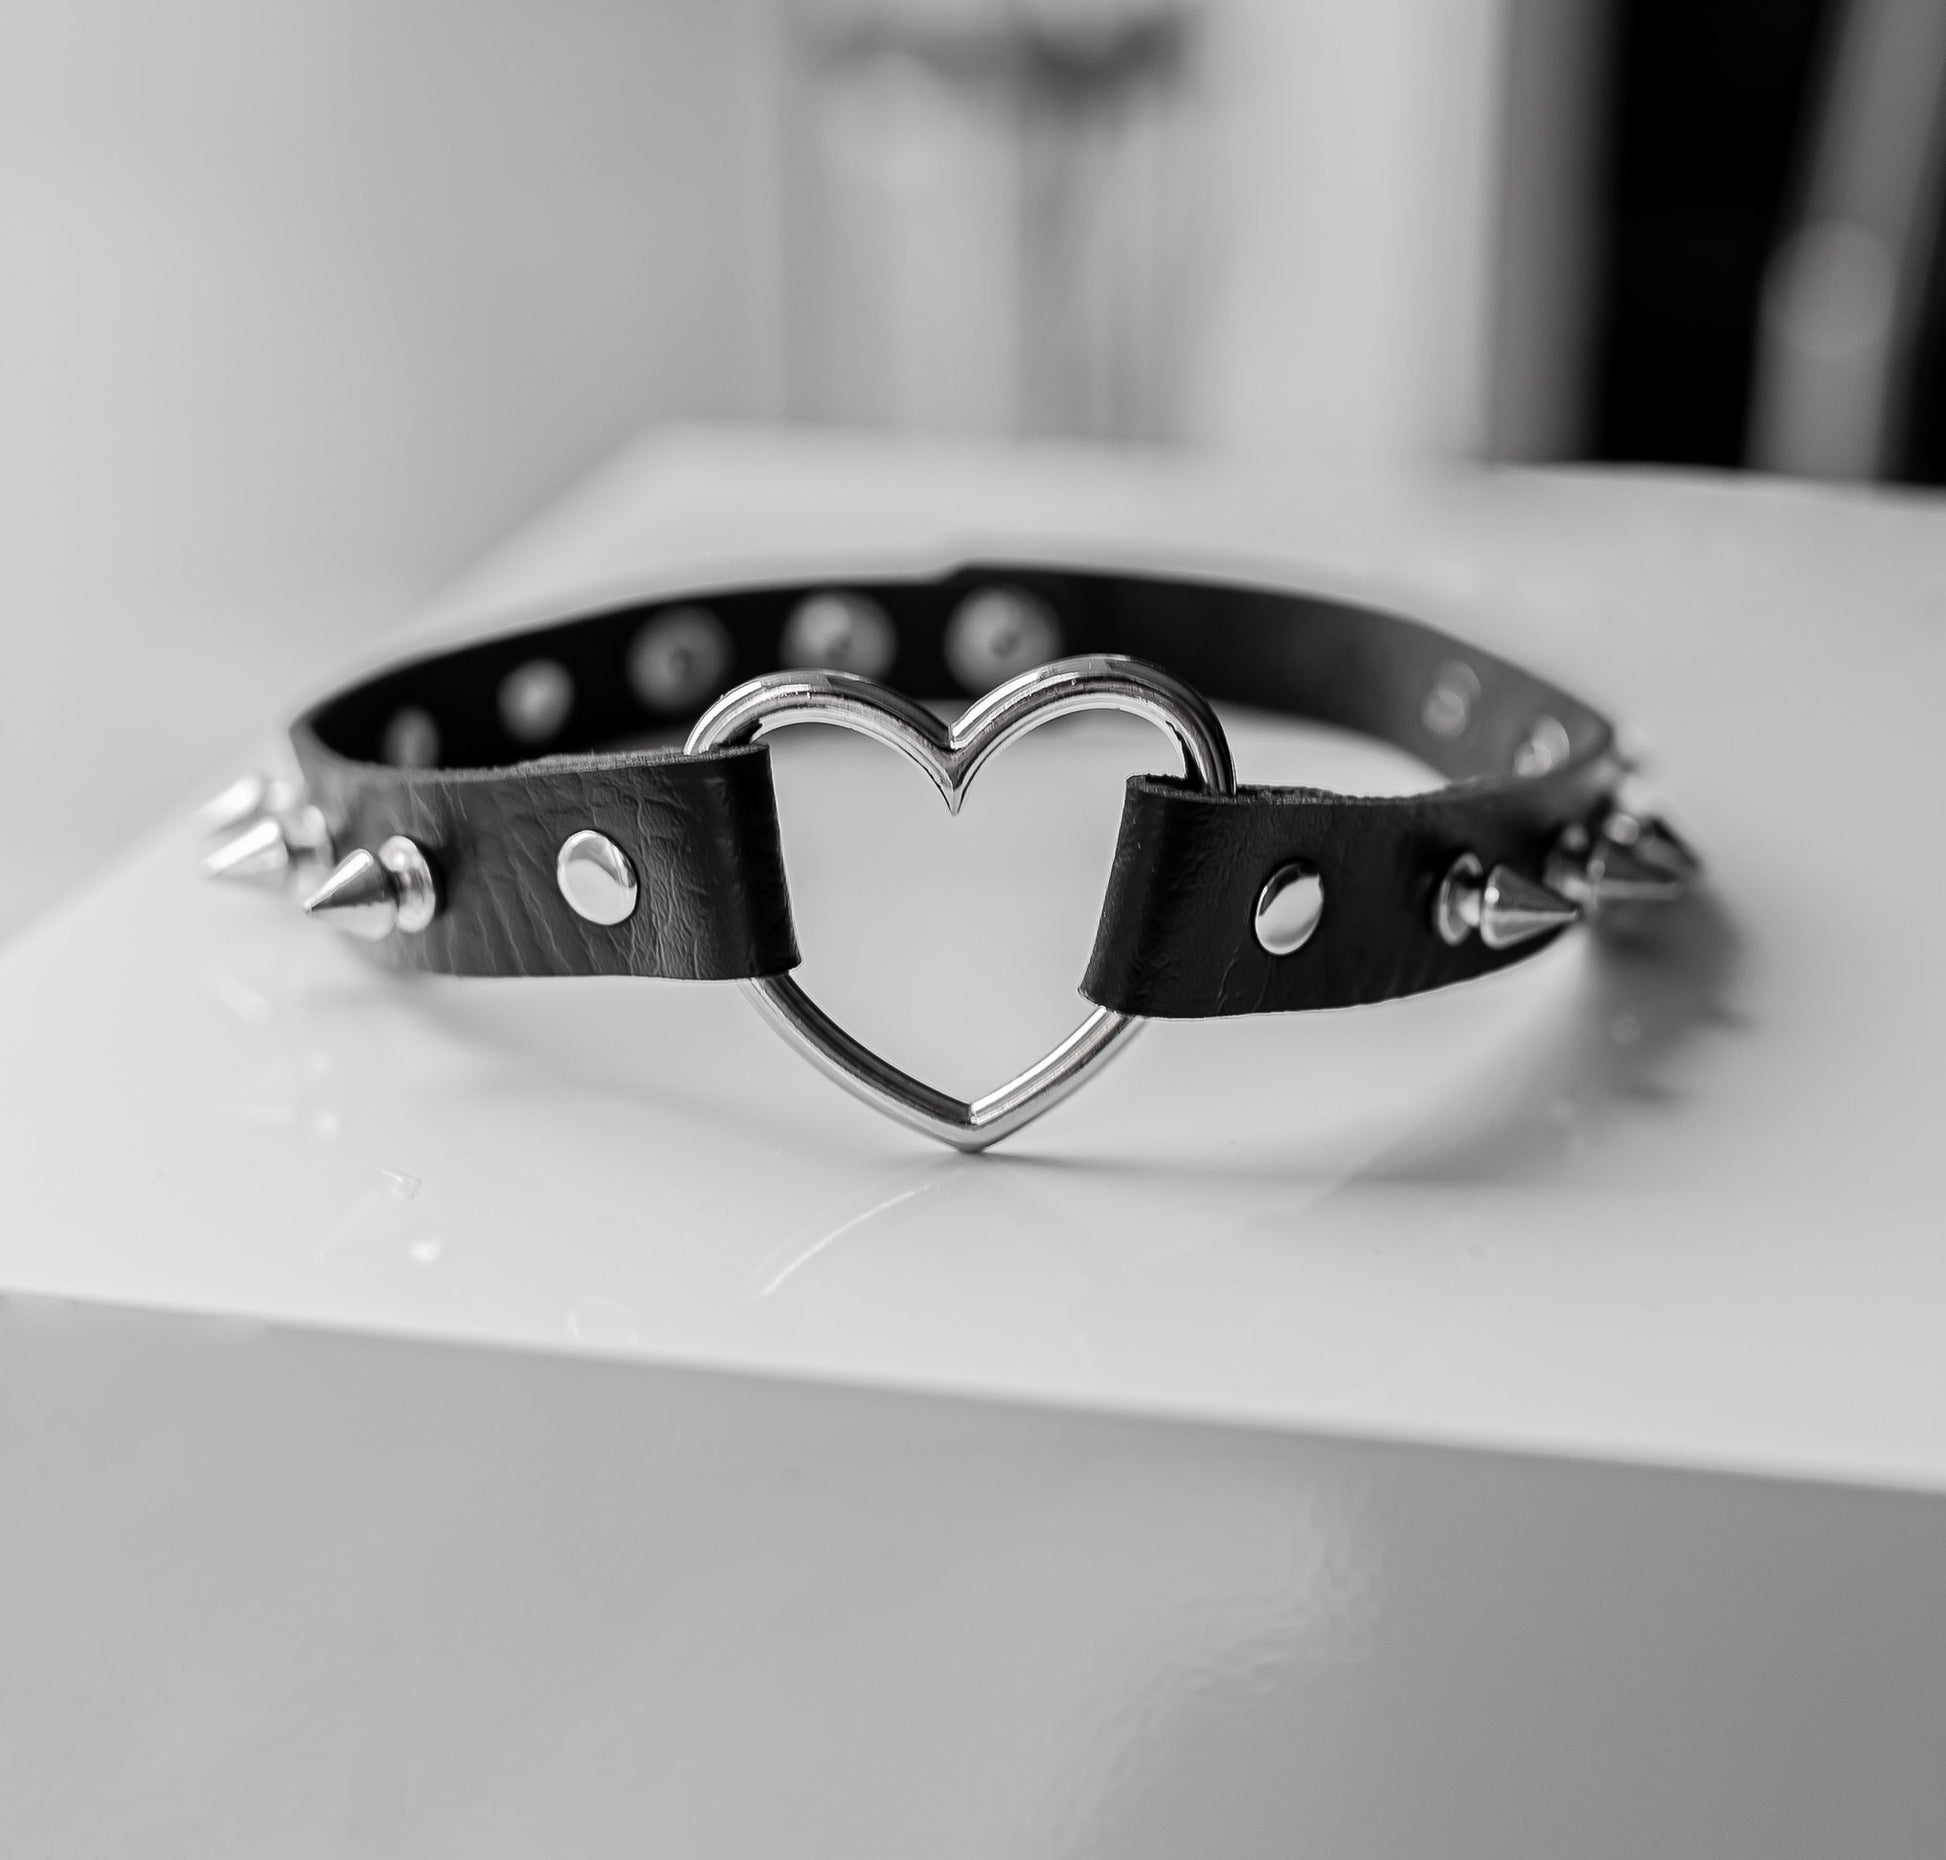 Black Spiked Heart-Shaped Choker Collar by Lewd Fashion